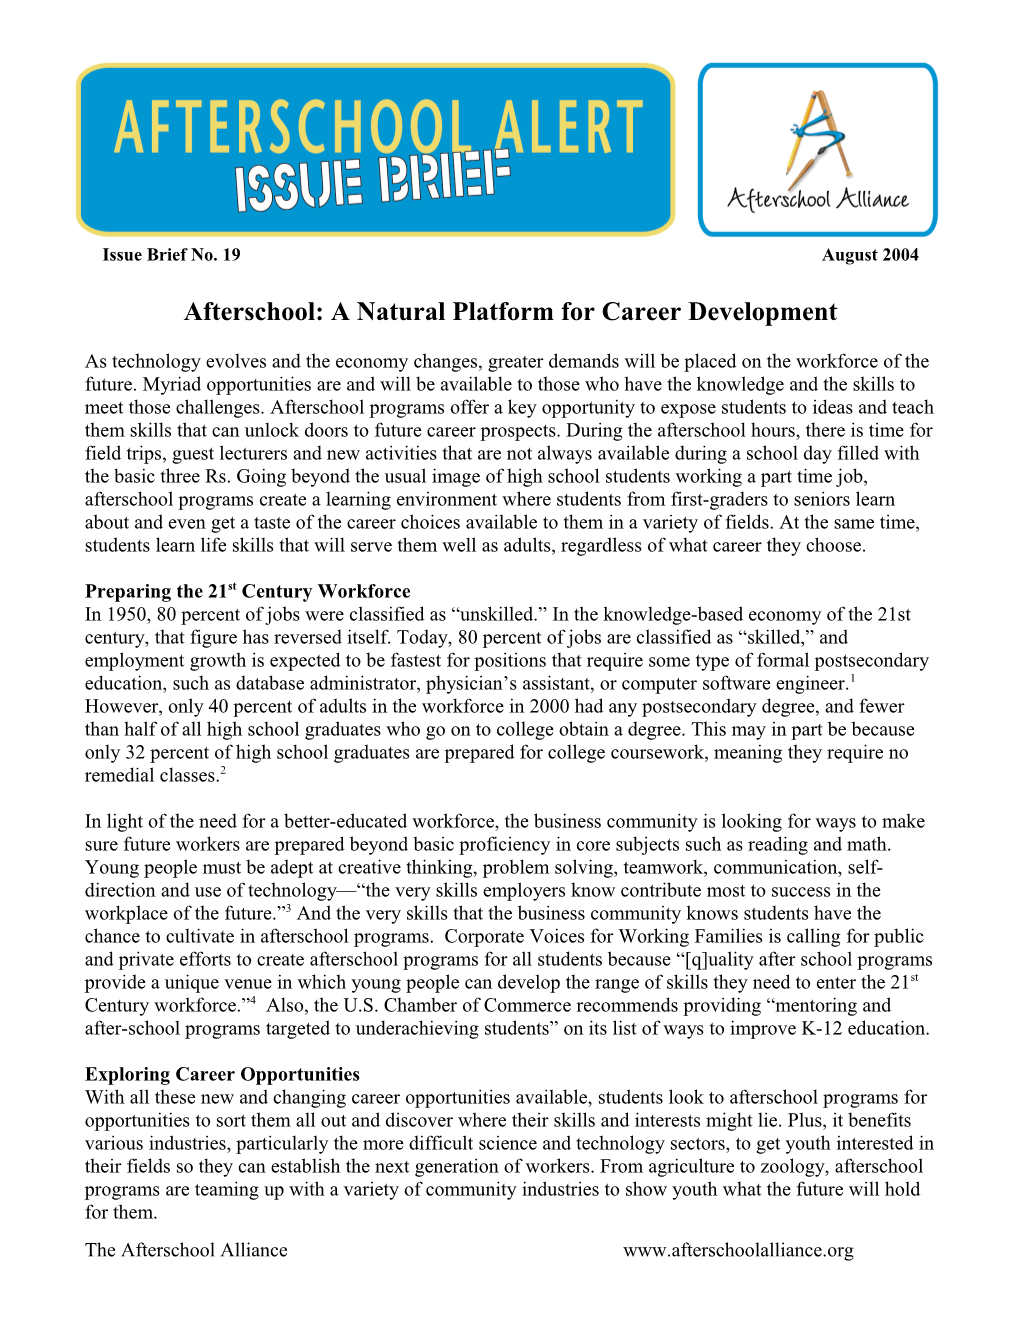 Afterschool Programs and Career Development